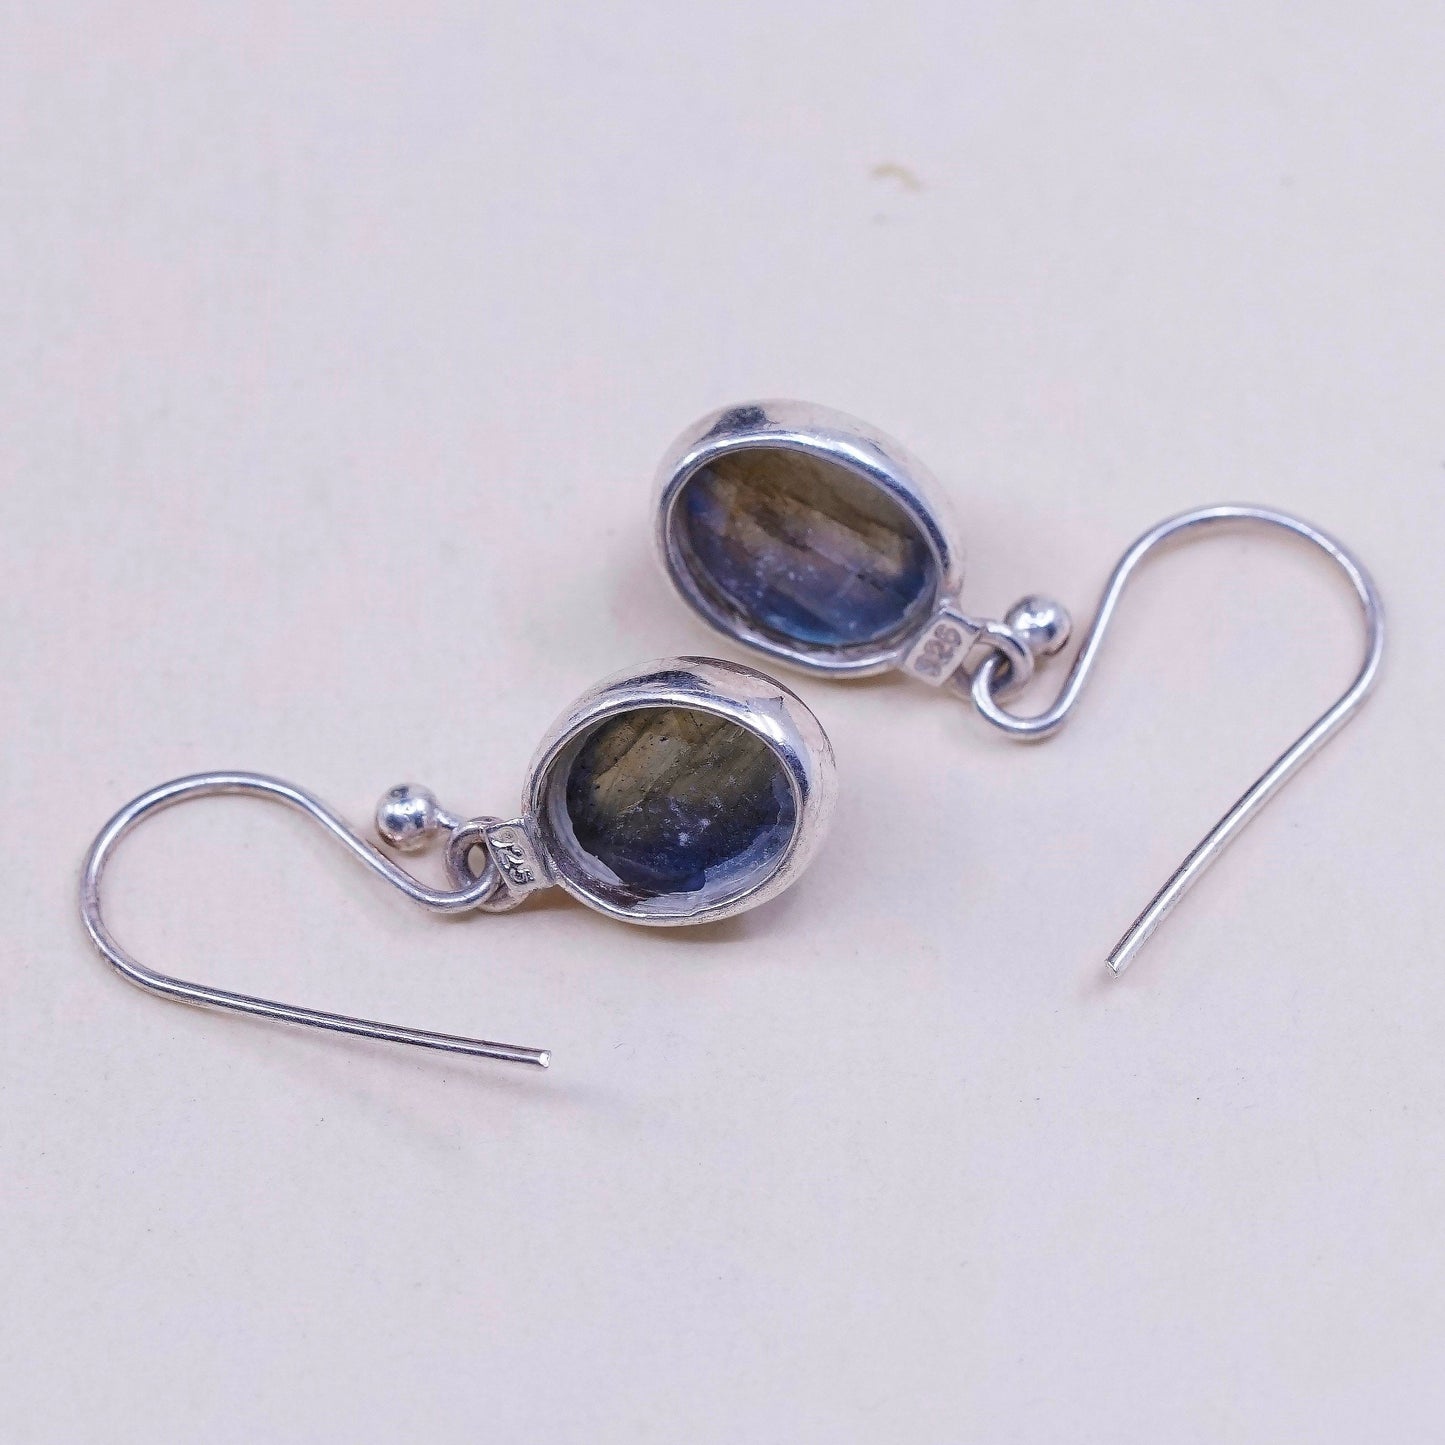 Vintage Sterling 925 silver handmade earrings with labradorite drops